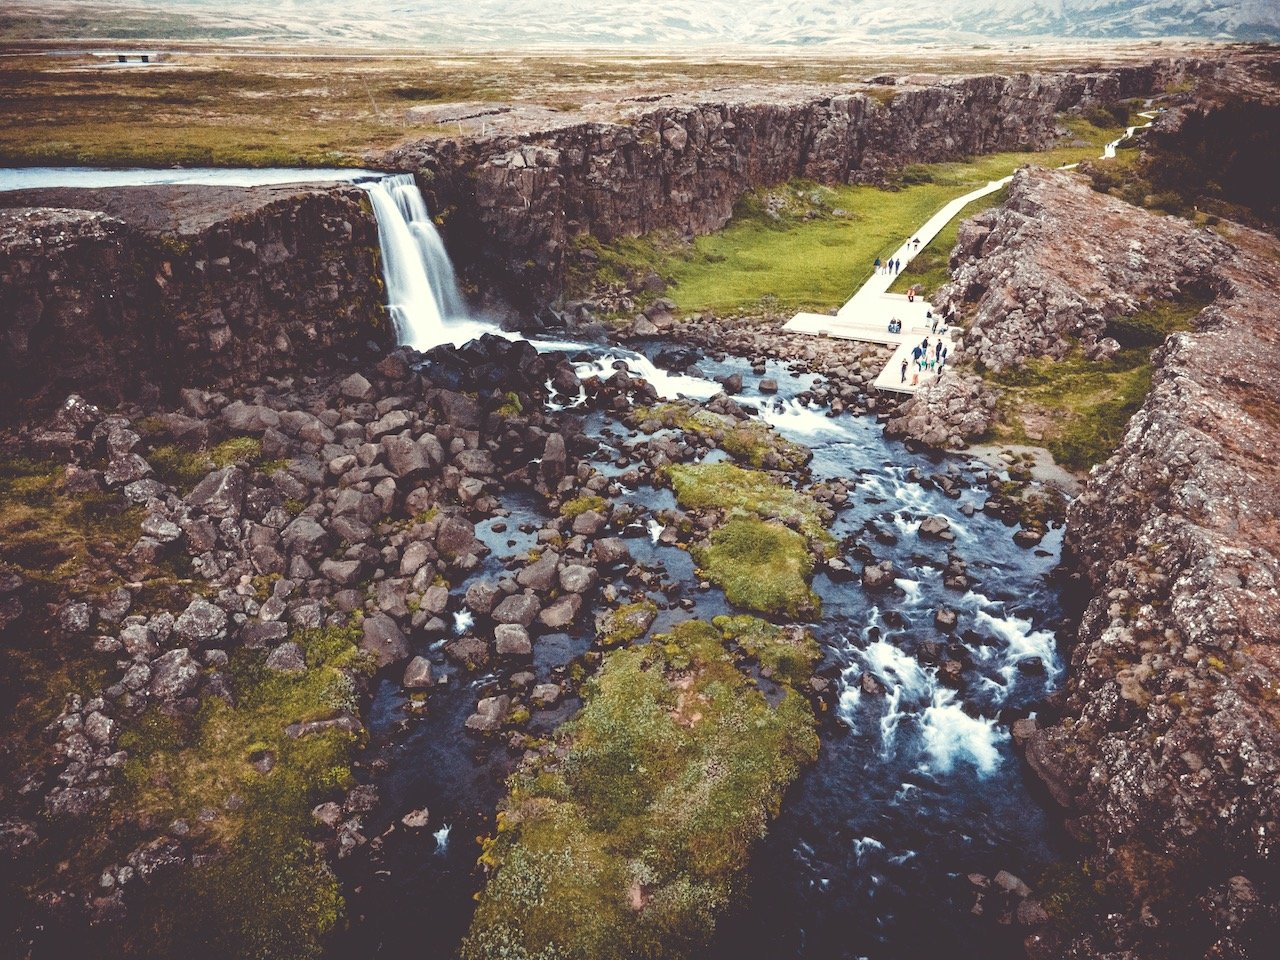   Öxarárfoss Waterfall, Iceland (ISO 760, 4.5 mm,  f /2.8, 1/4 s)  